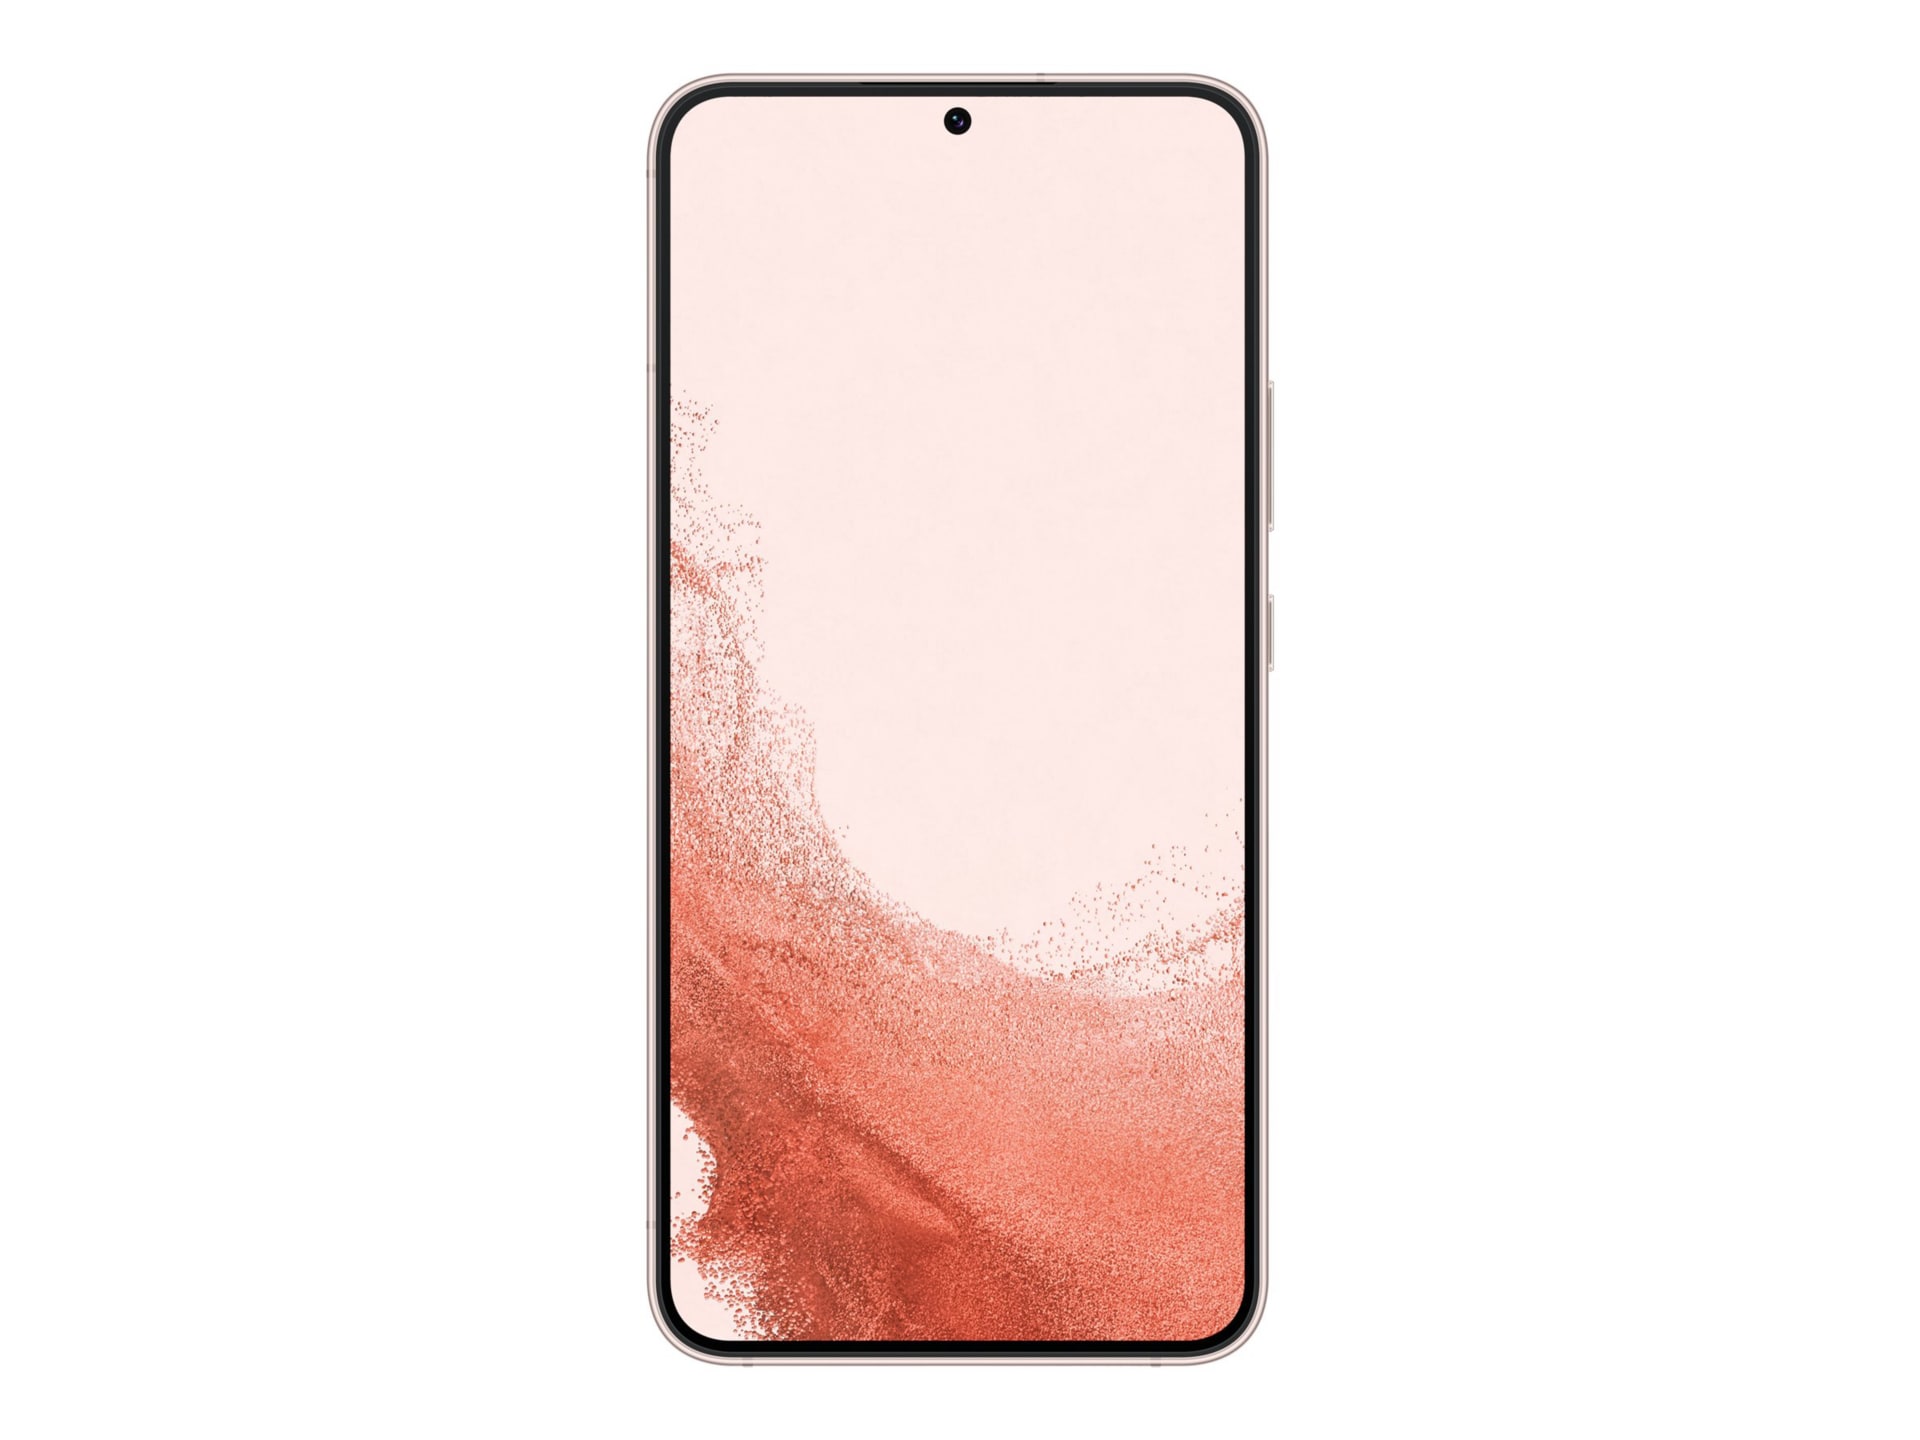 Samsung Galaxy S22+ - pink gold - 5G smartphone - 128 GB - GSM